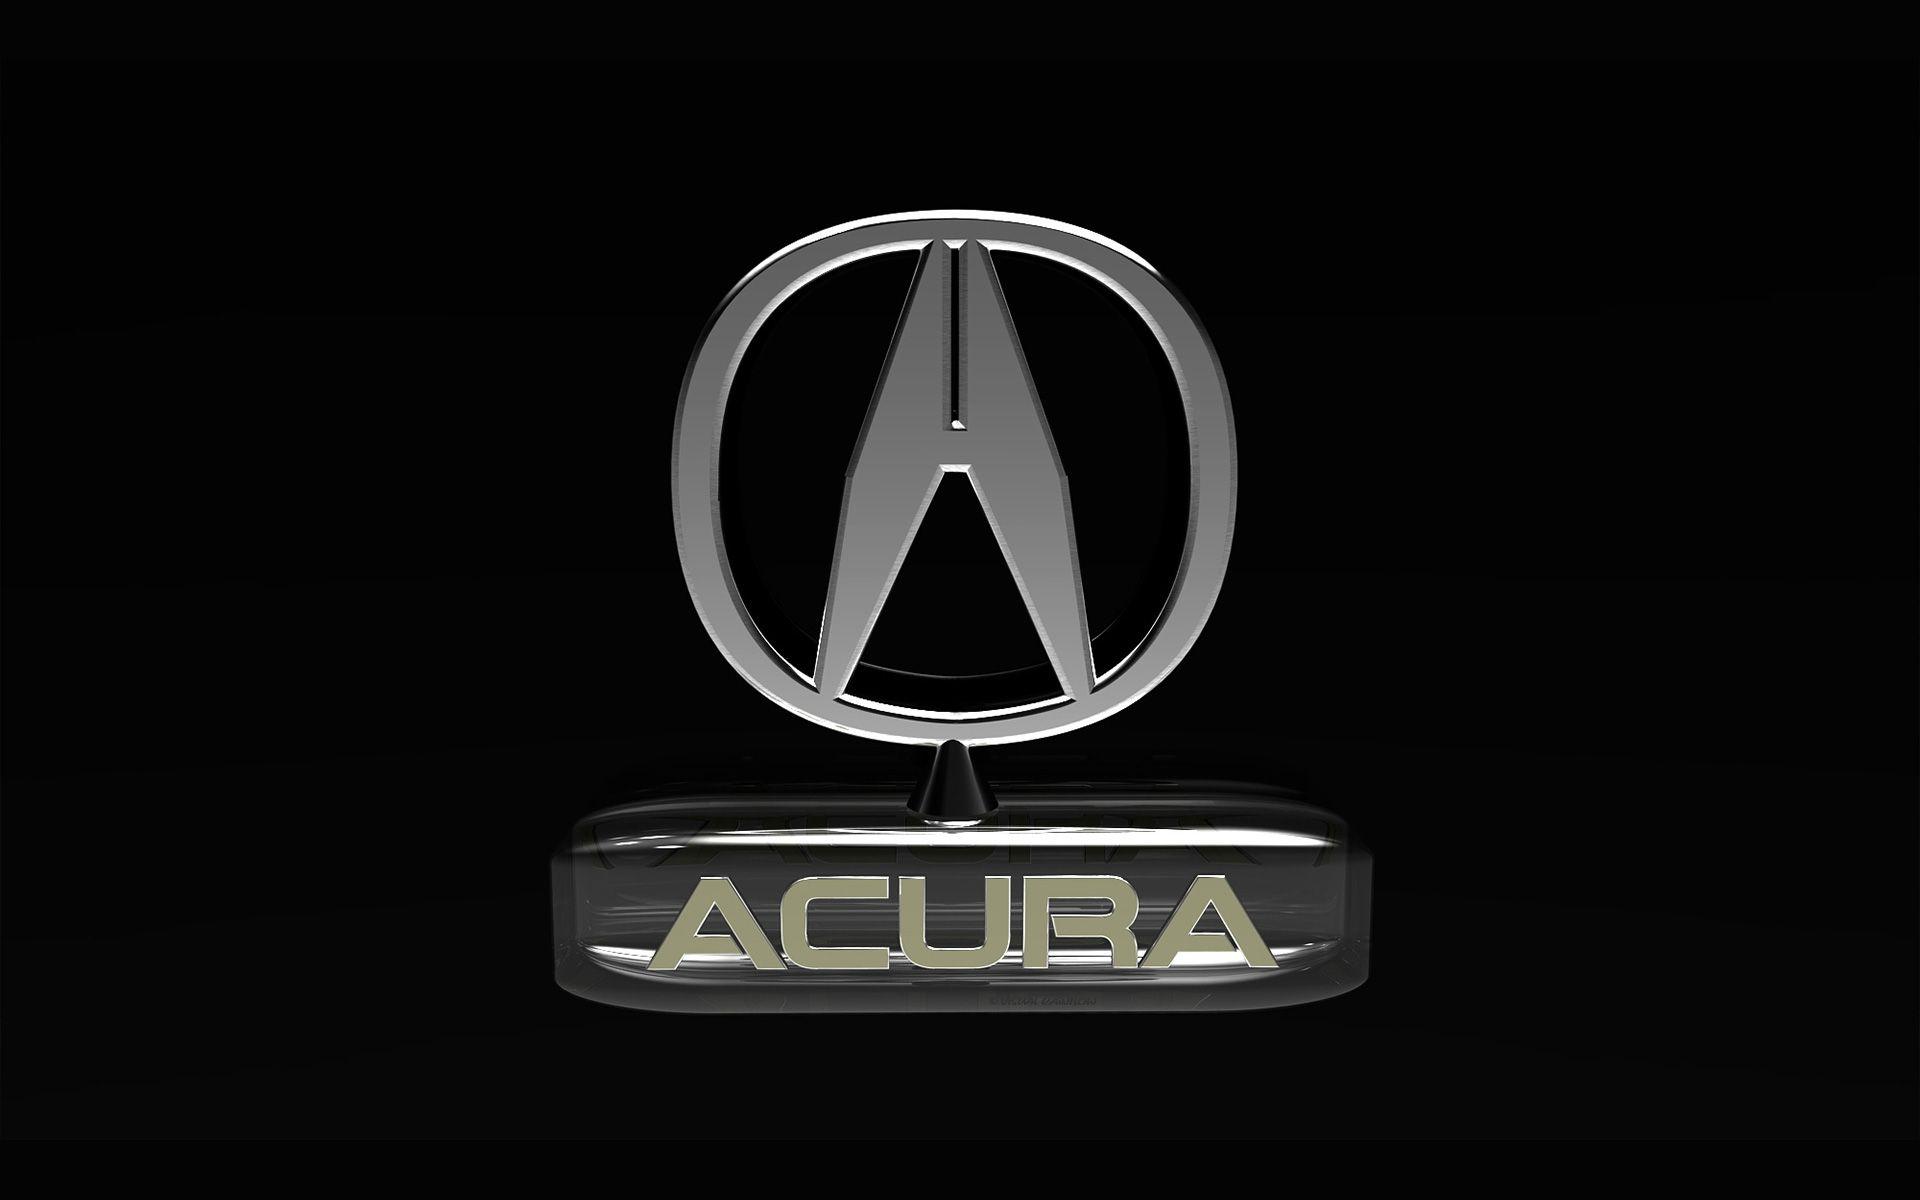 Black and White Automotive Logo - Acura Logo, Acura Car Symbol Meaning and History | Car Brand Names.com